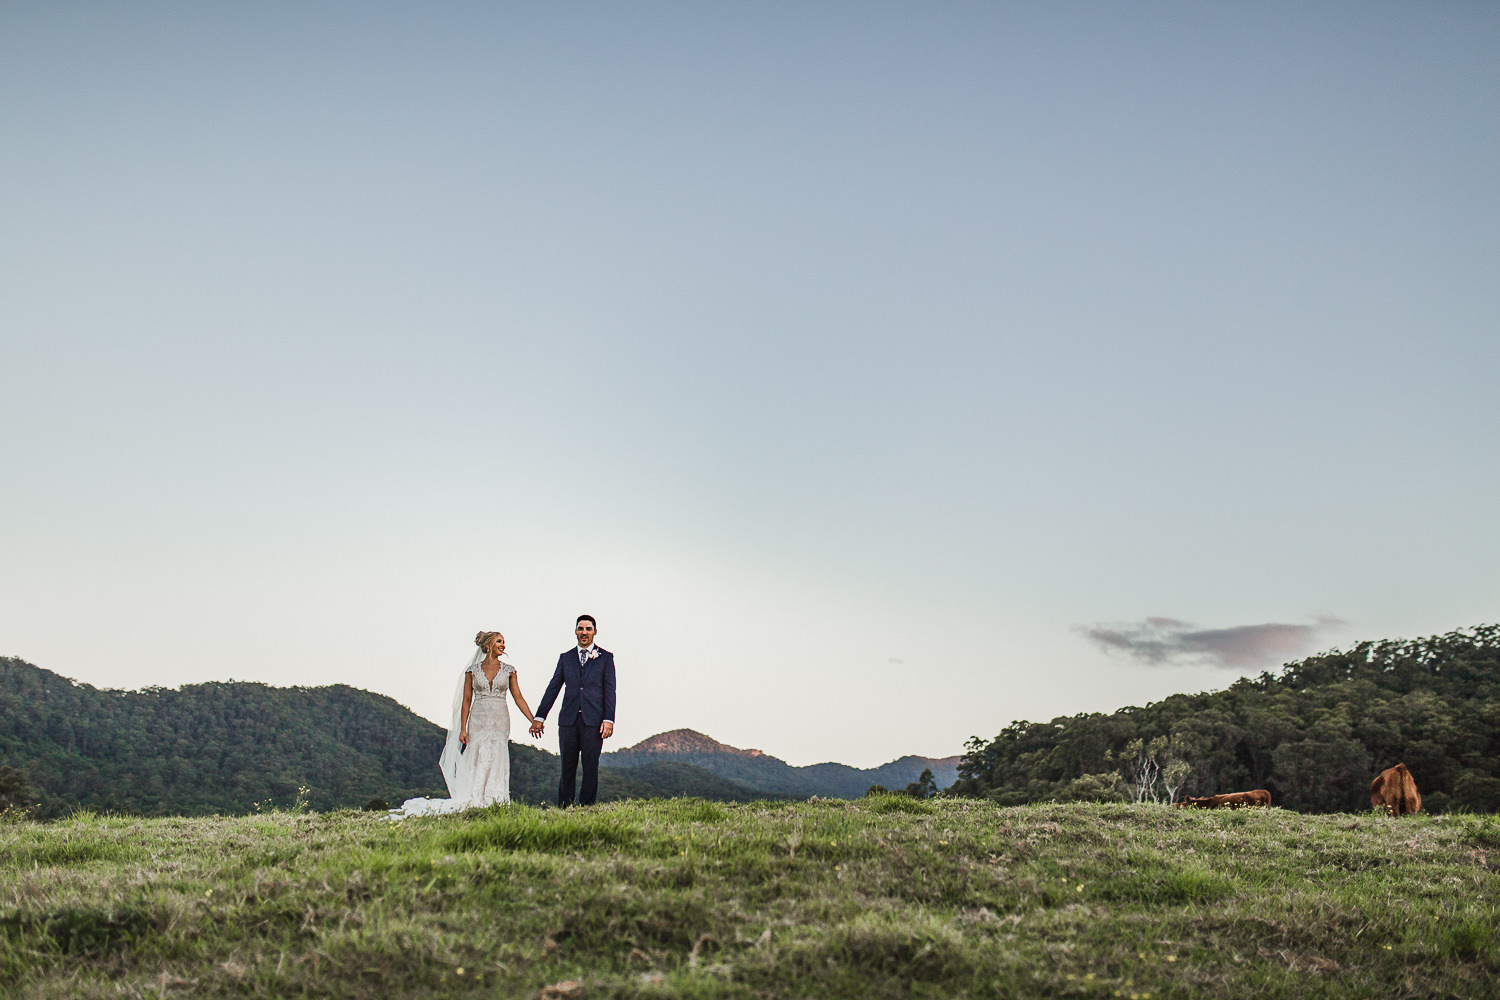 True-North-Photography-Cowbell-Creek-Gold-Coast-wedding-photographer-78.jpg